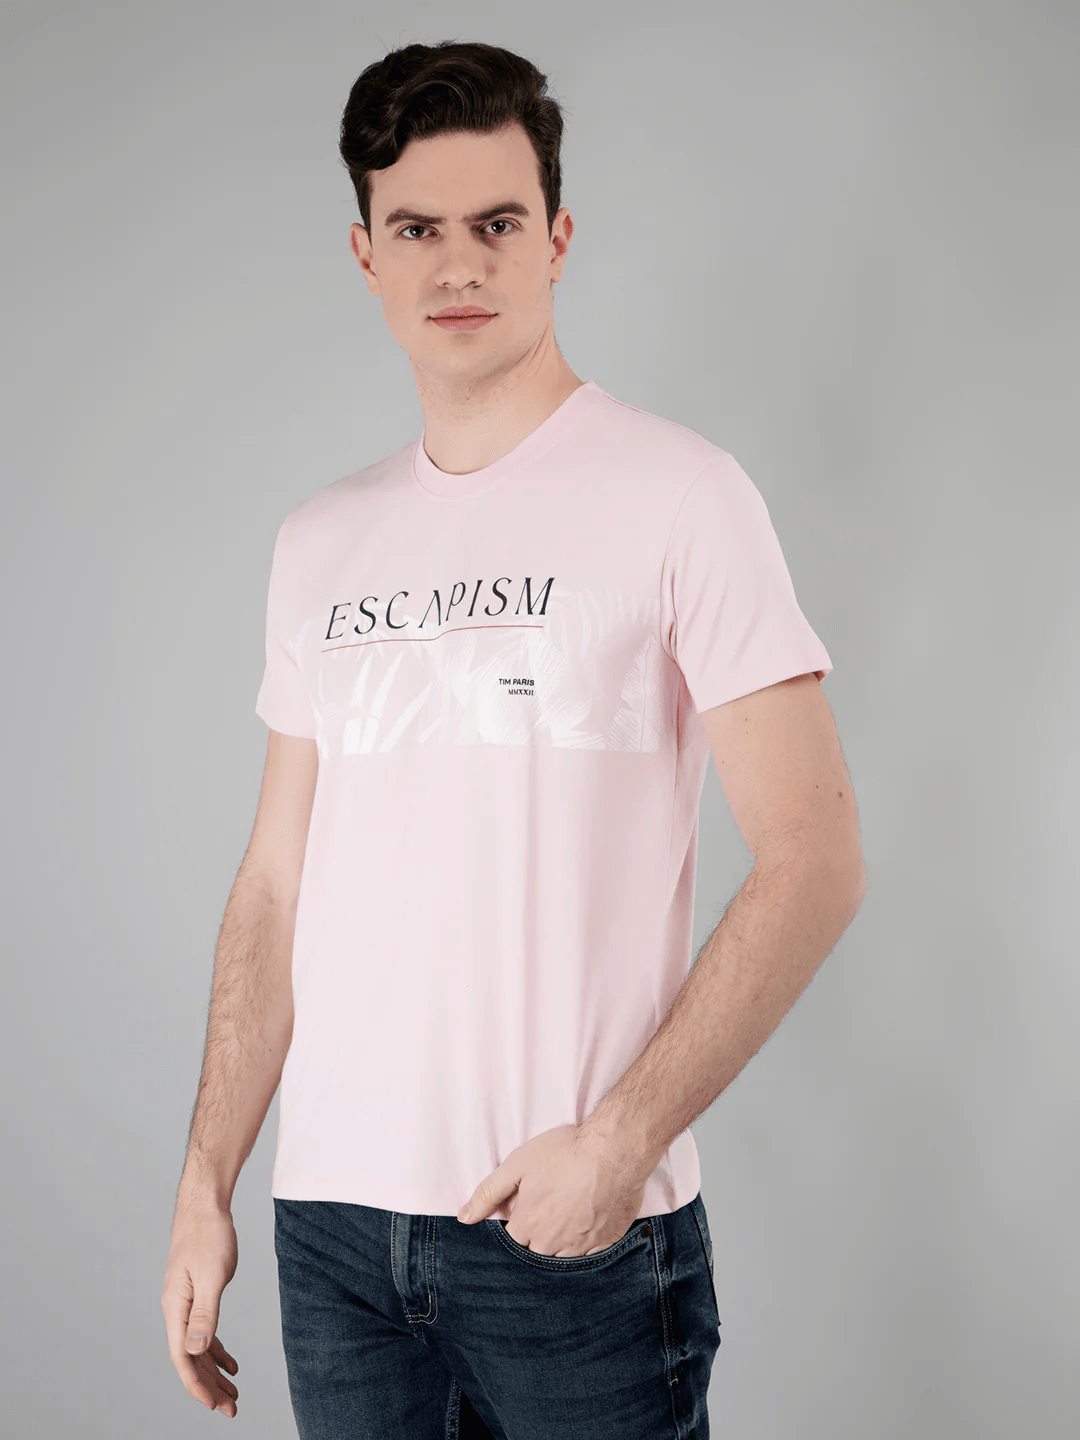 Buy Mens T Shirts Online